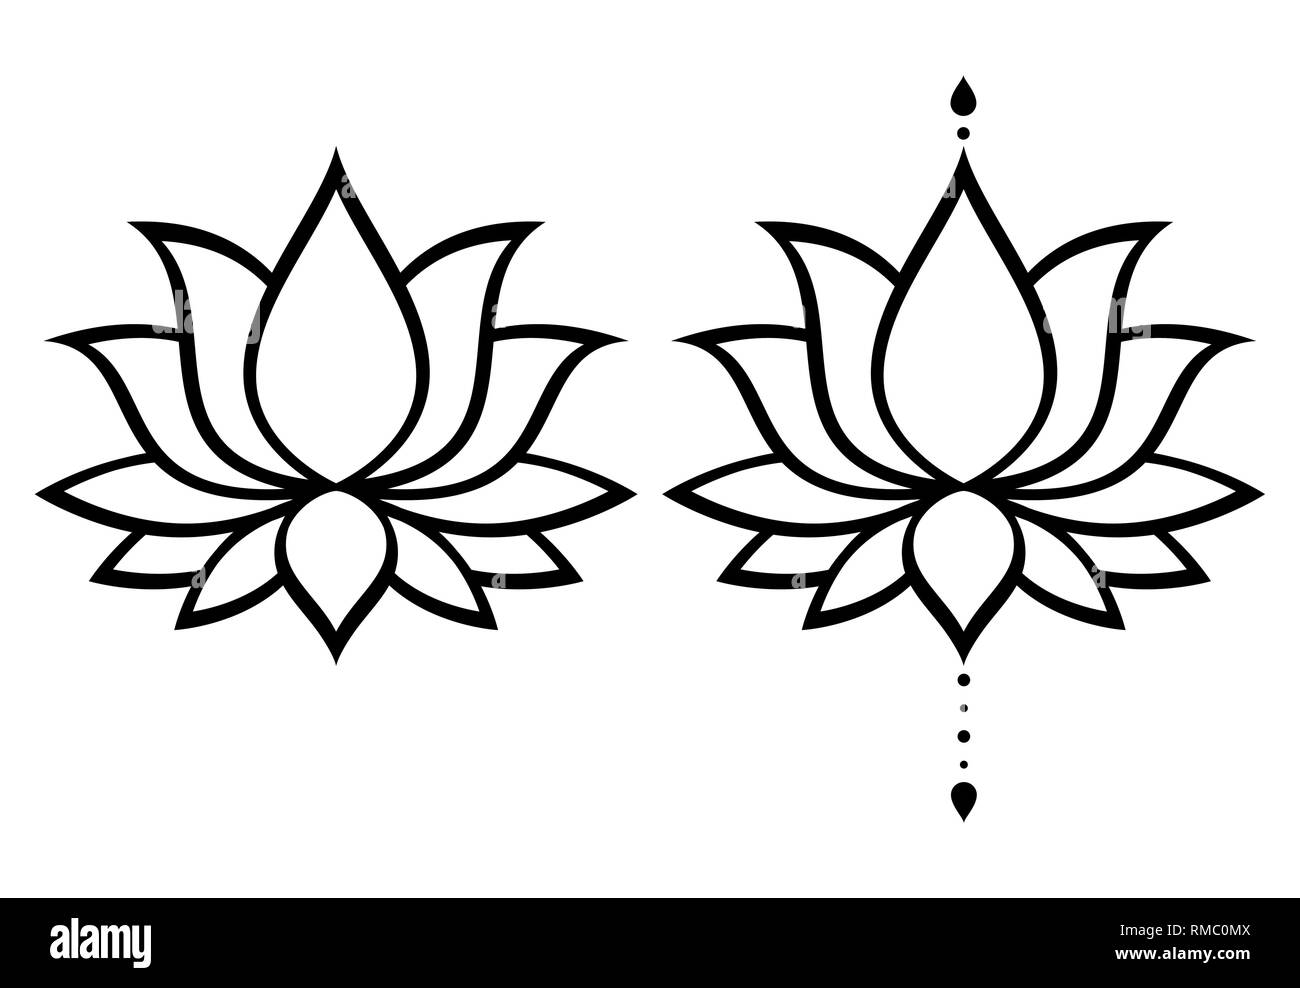 Lotus Flower vektor design gesetzt, Yoga oder Zen dekorativen Hintergrund - boho Style Stock Vektor